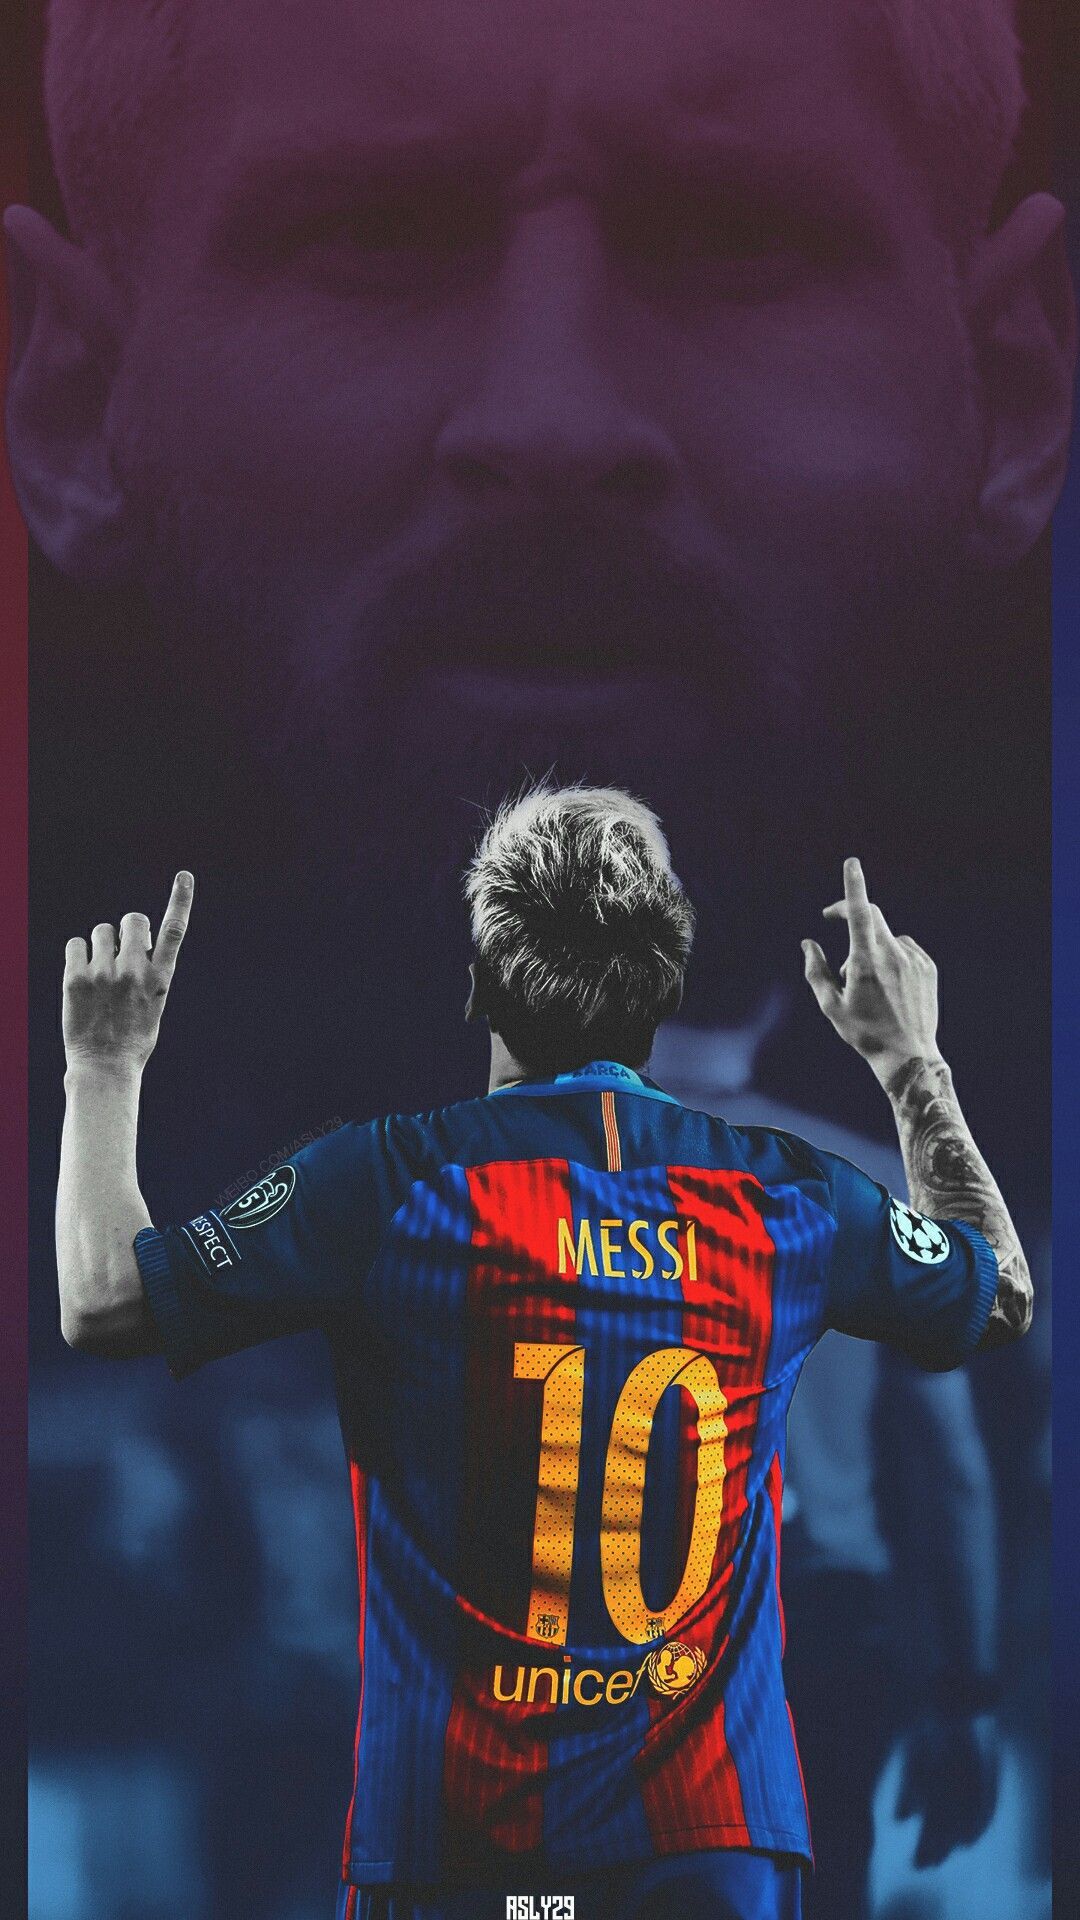 Adidas Messi iPhone Wallpaper At Wallpaperbro